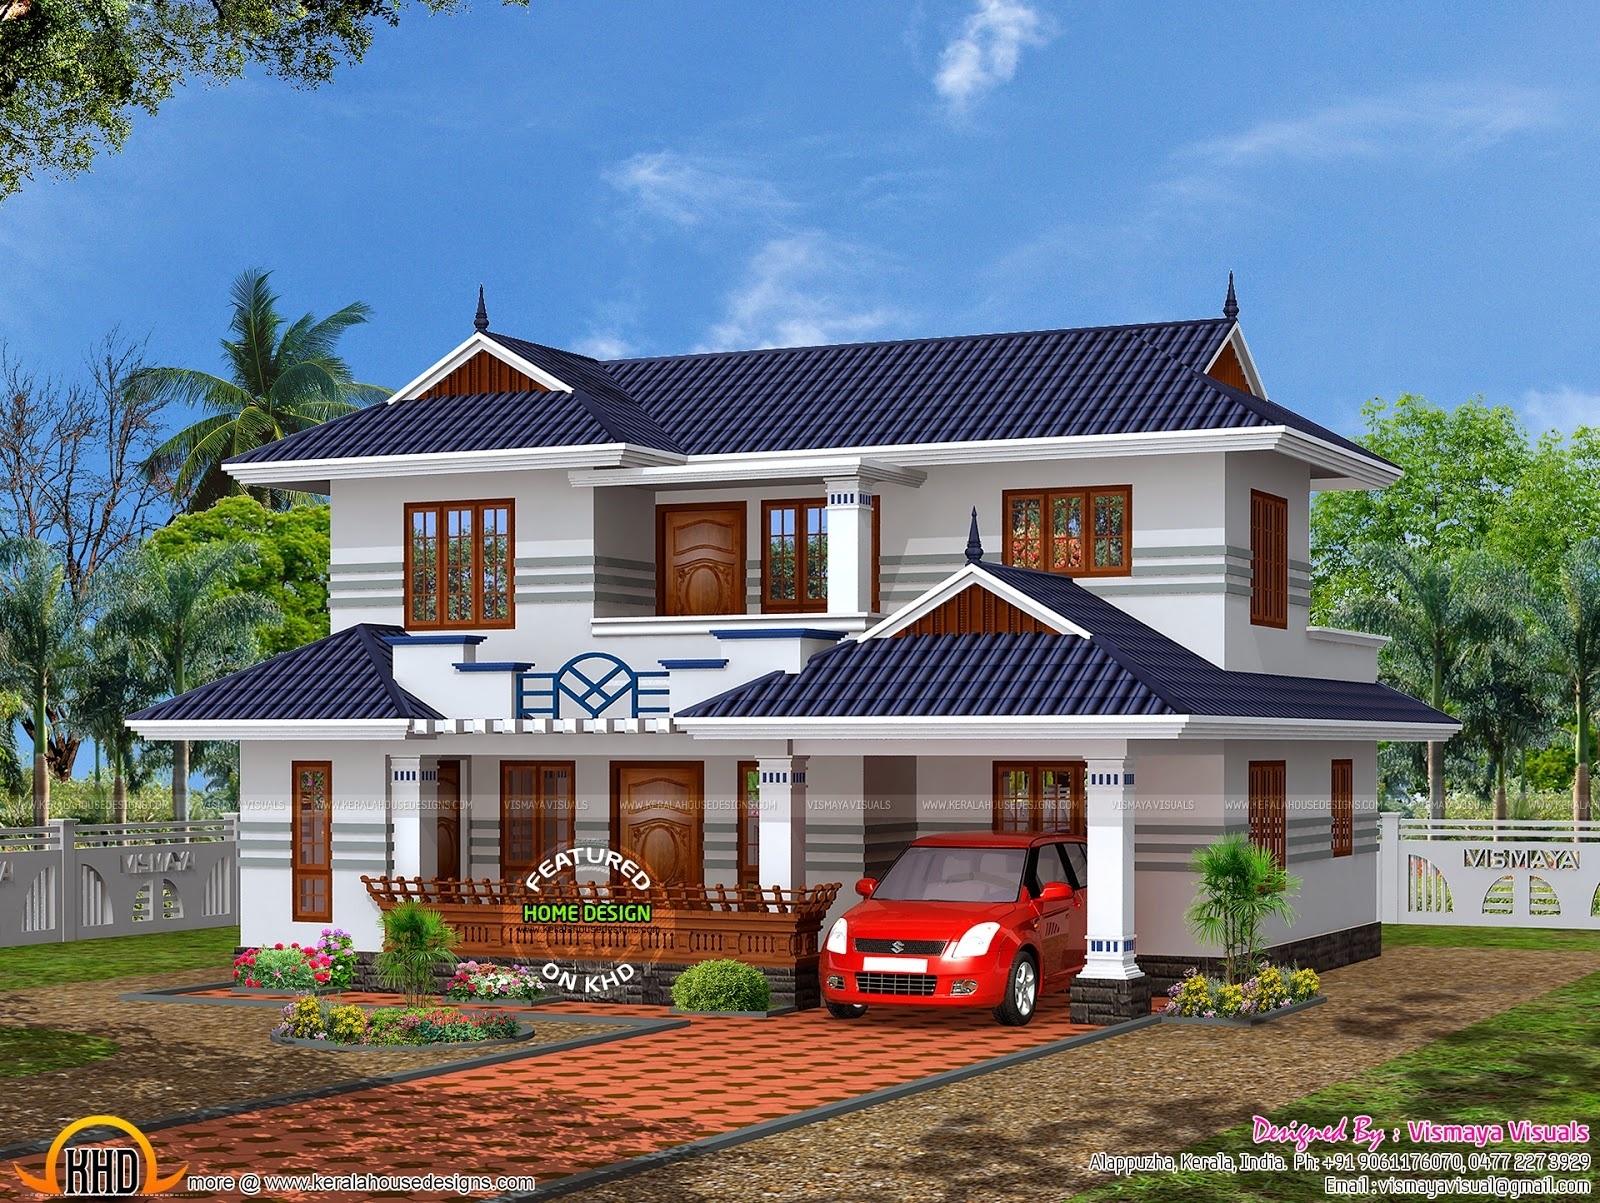 Exquisite nalukettu house plan, kerala | keralahousedesigns inside astonishing kerala model house plans750 sq ft